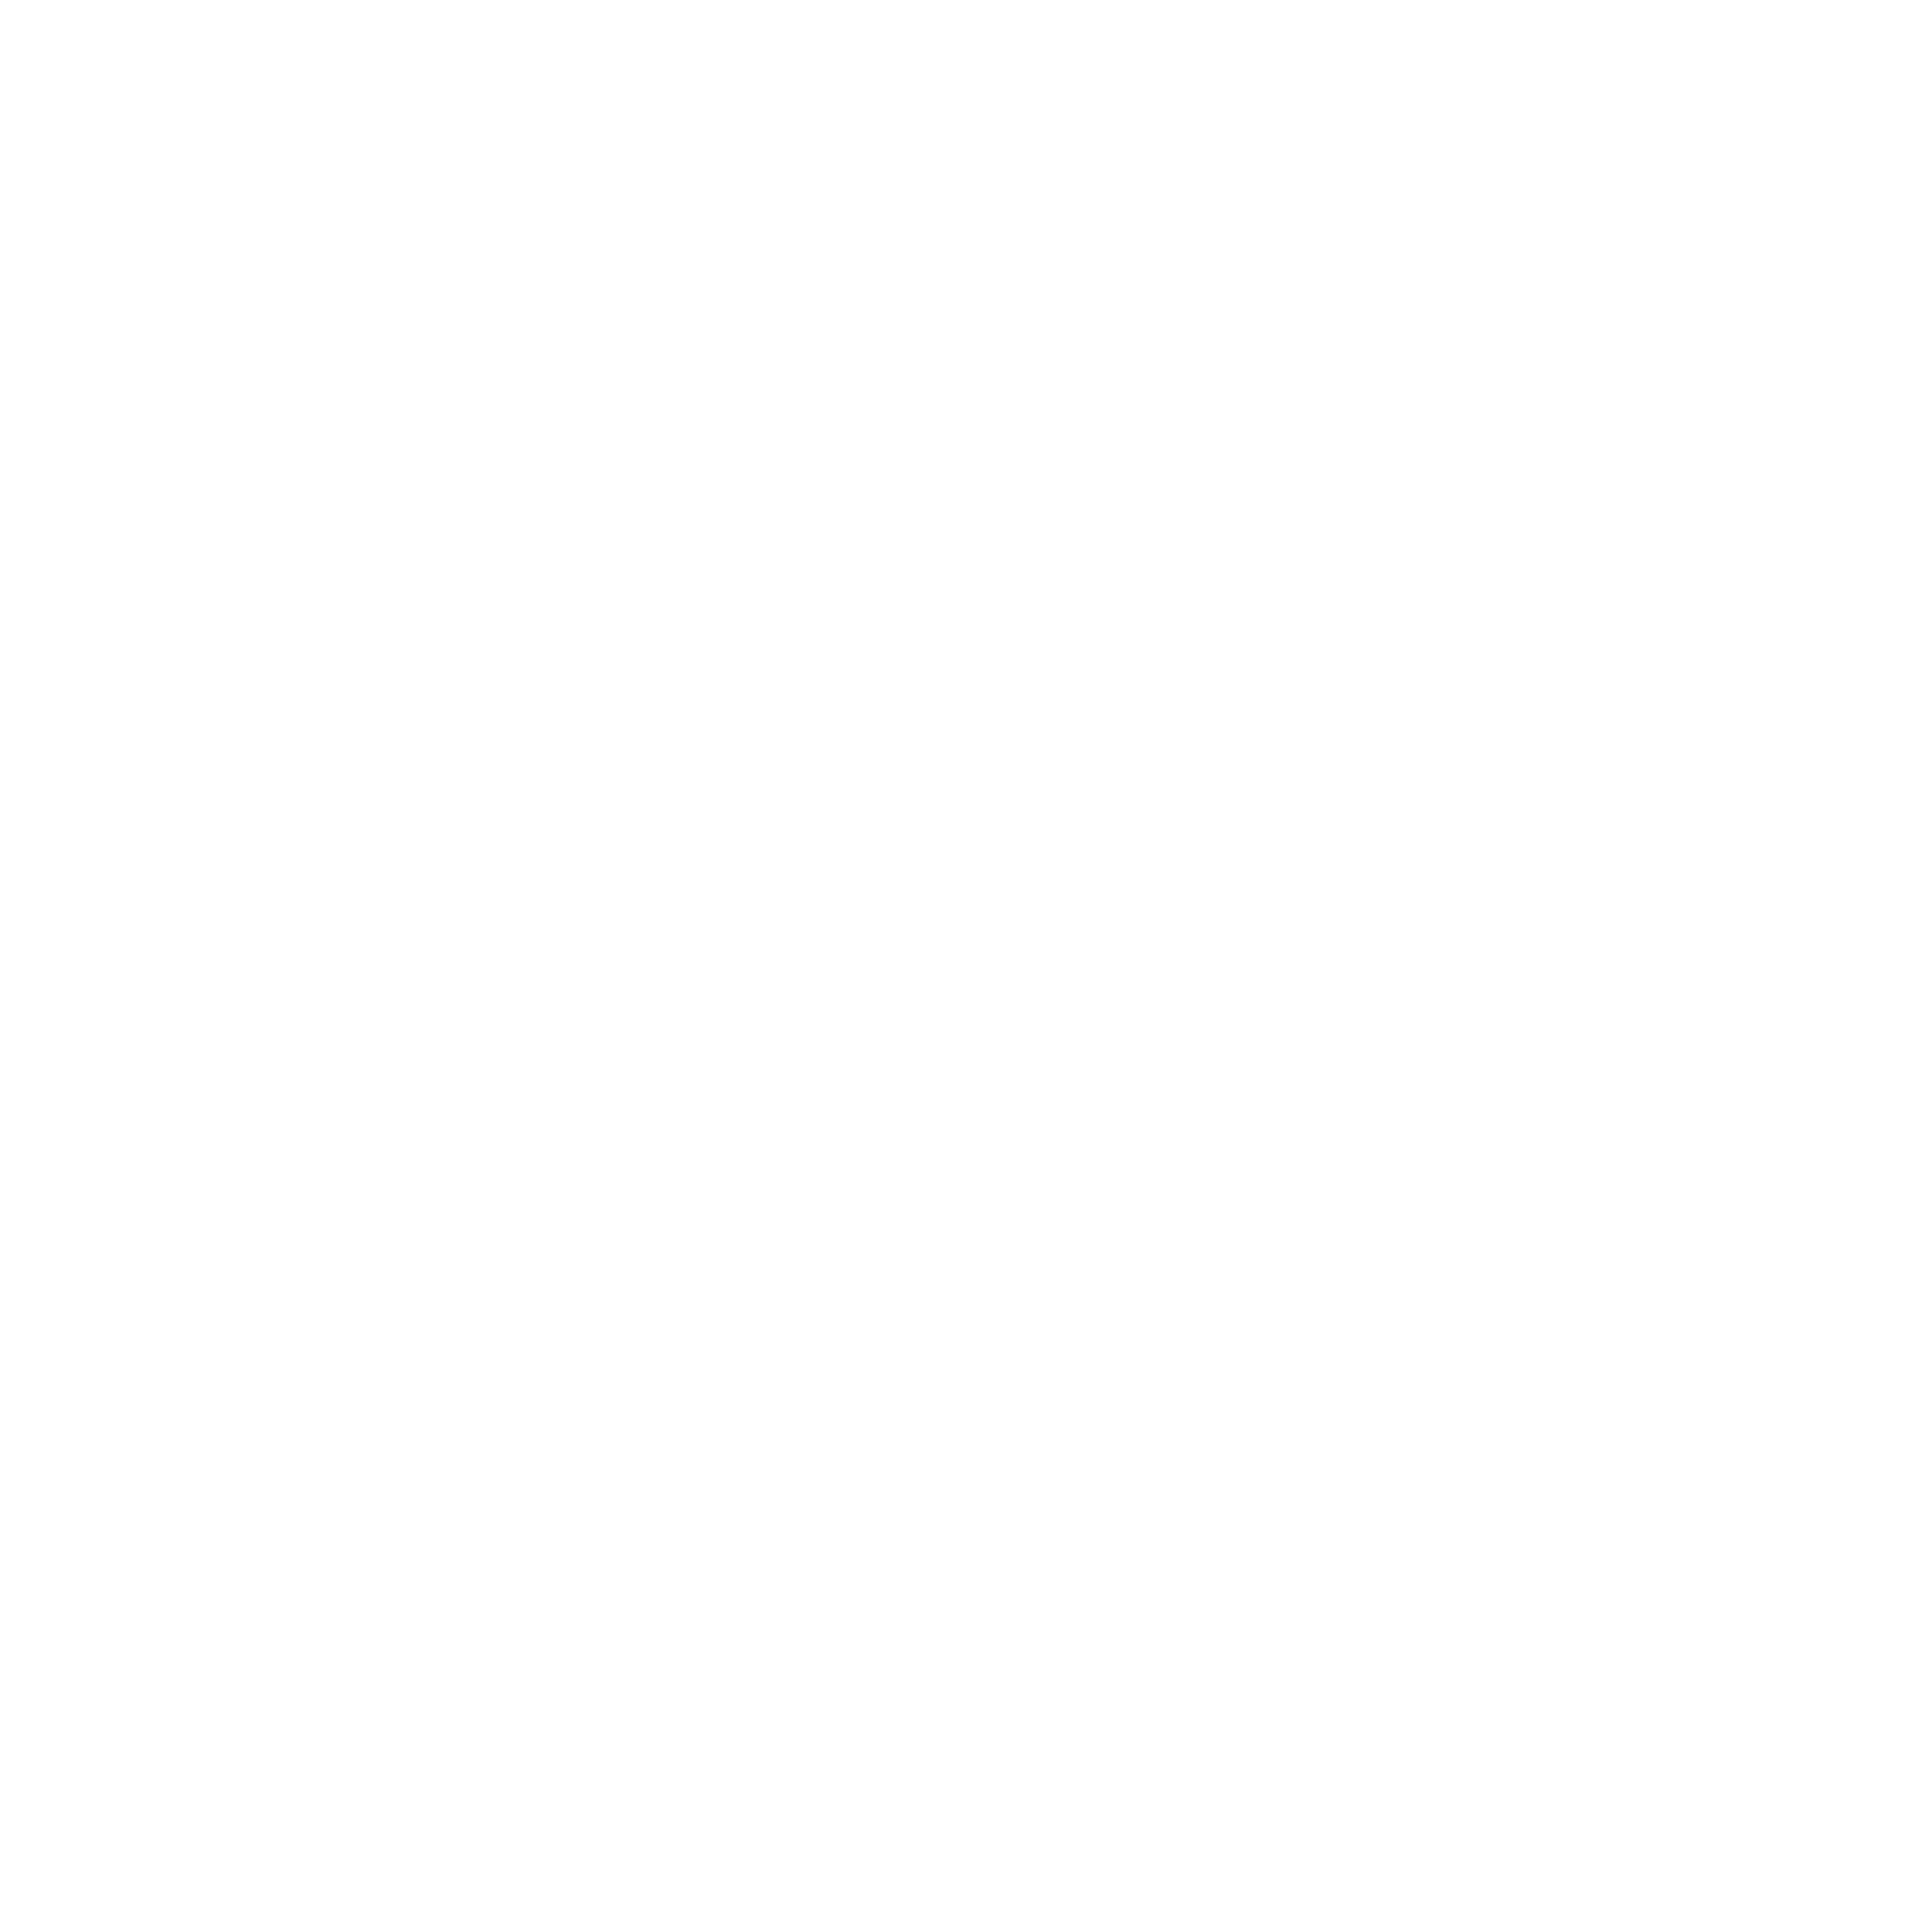 WiseEarth bush school logo